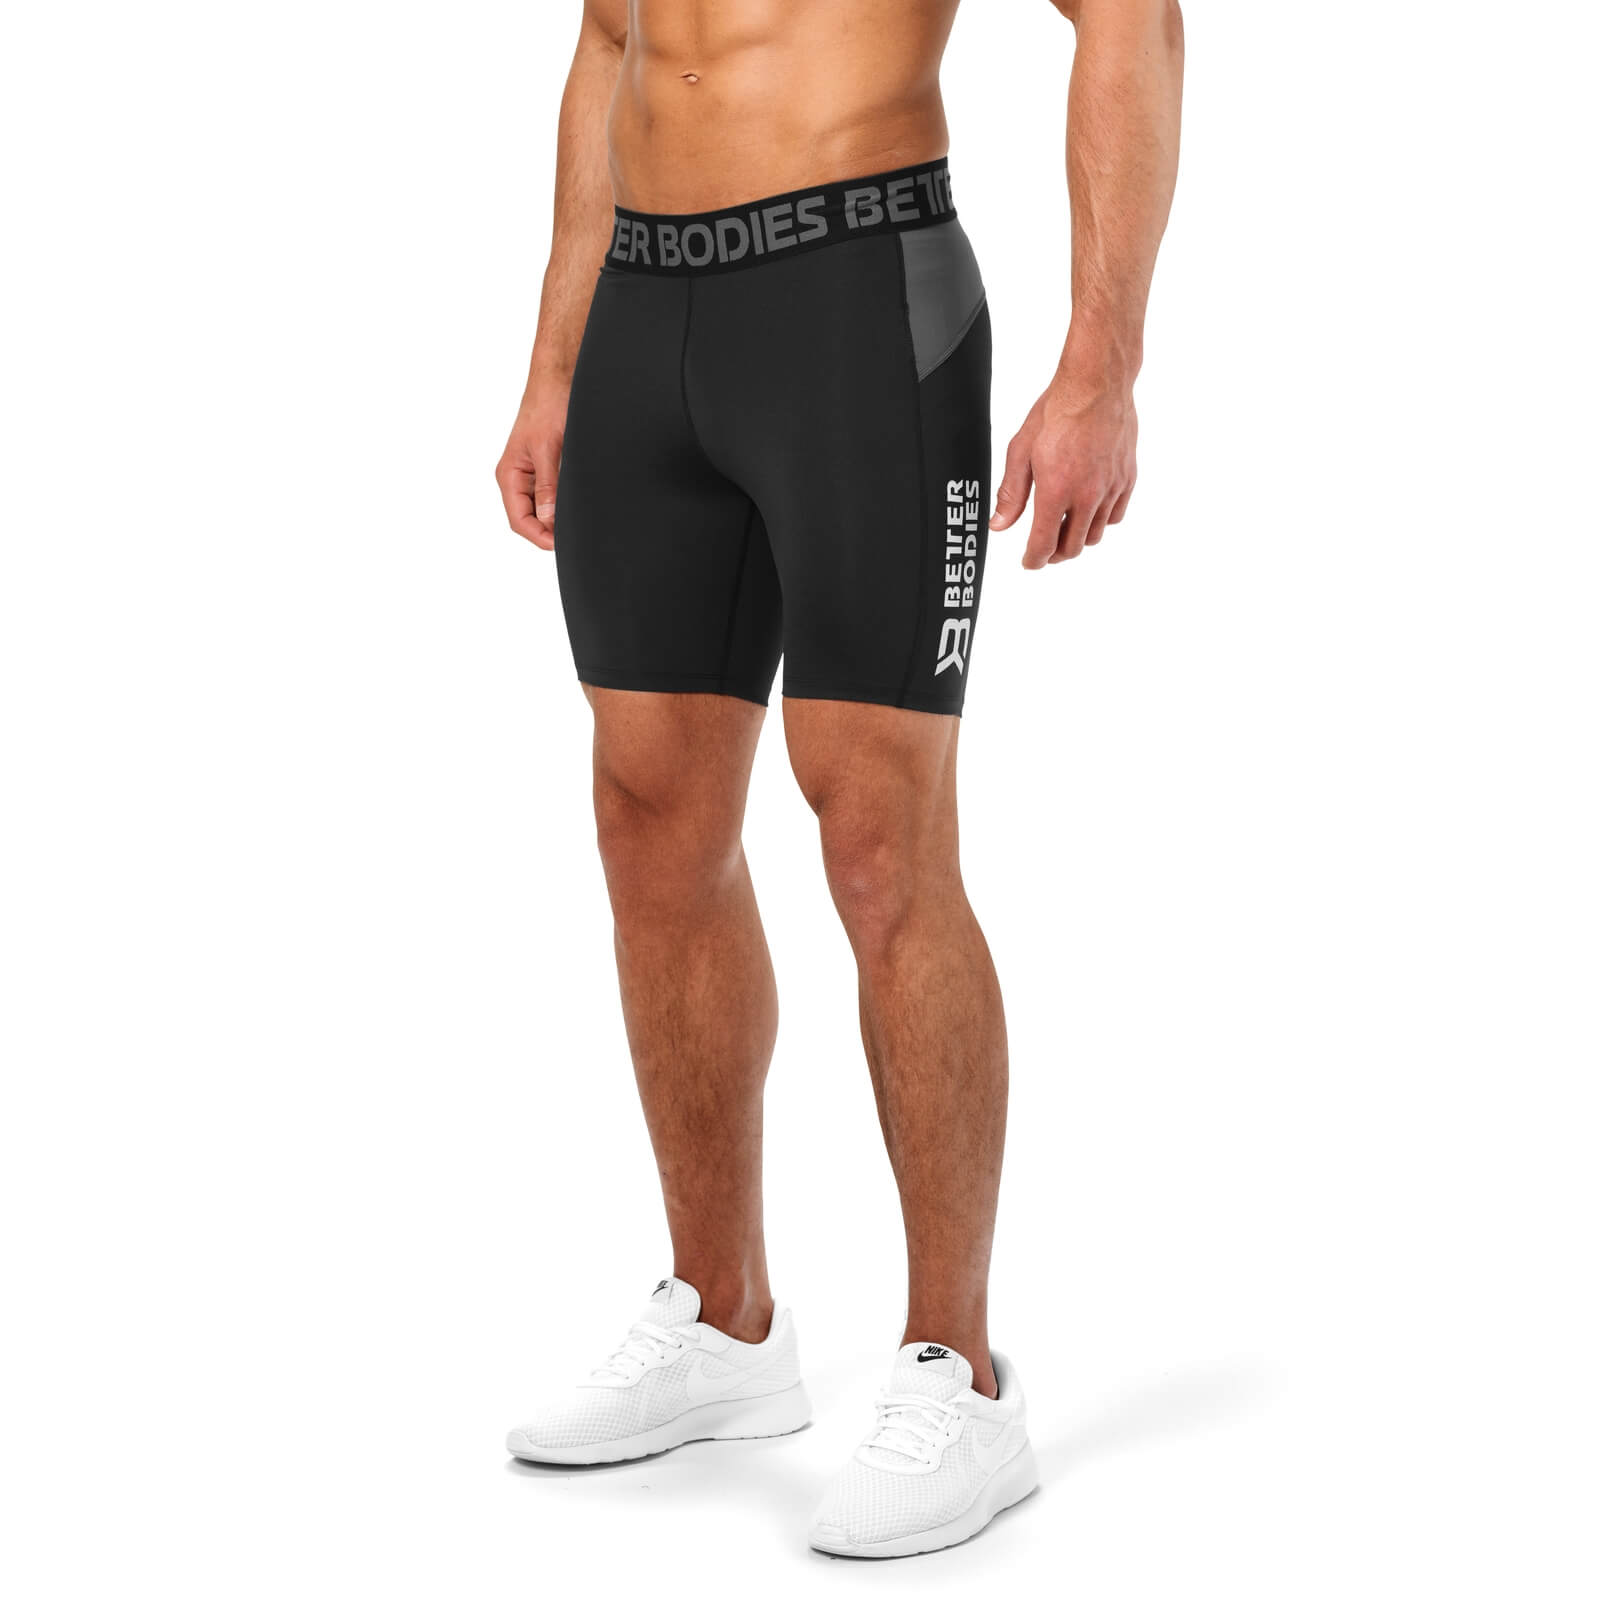 Sjekke Compression Shorts, black, Better Bodies hos SportGymButikken.no